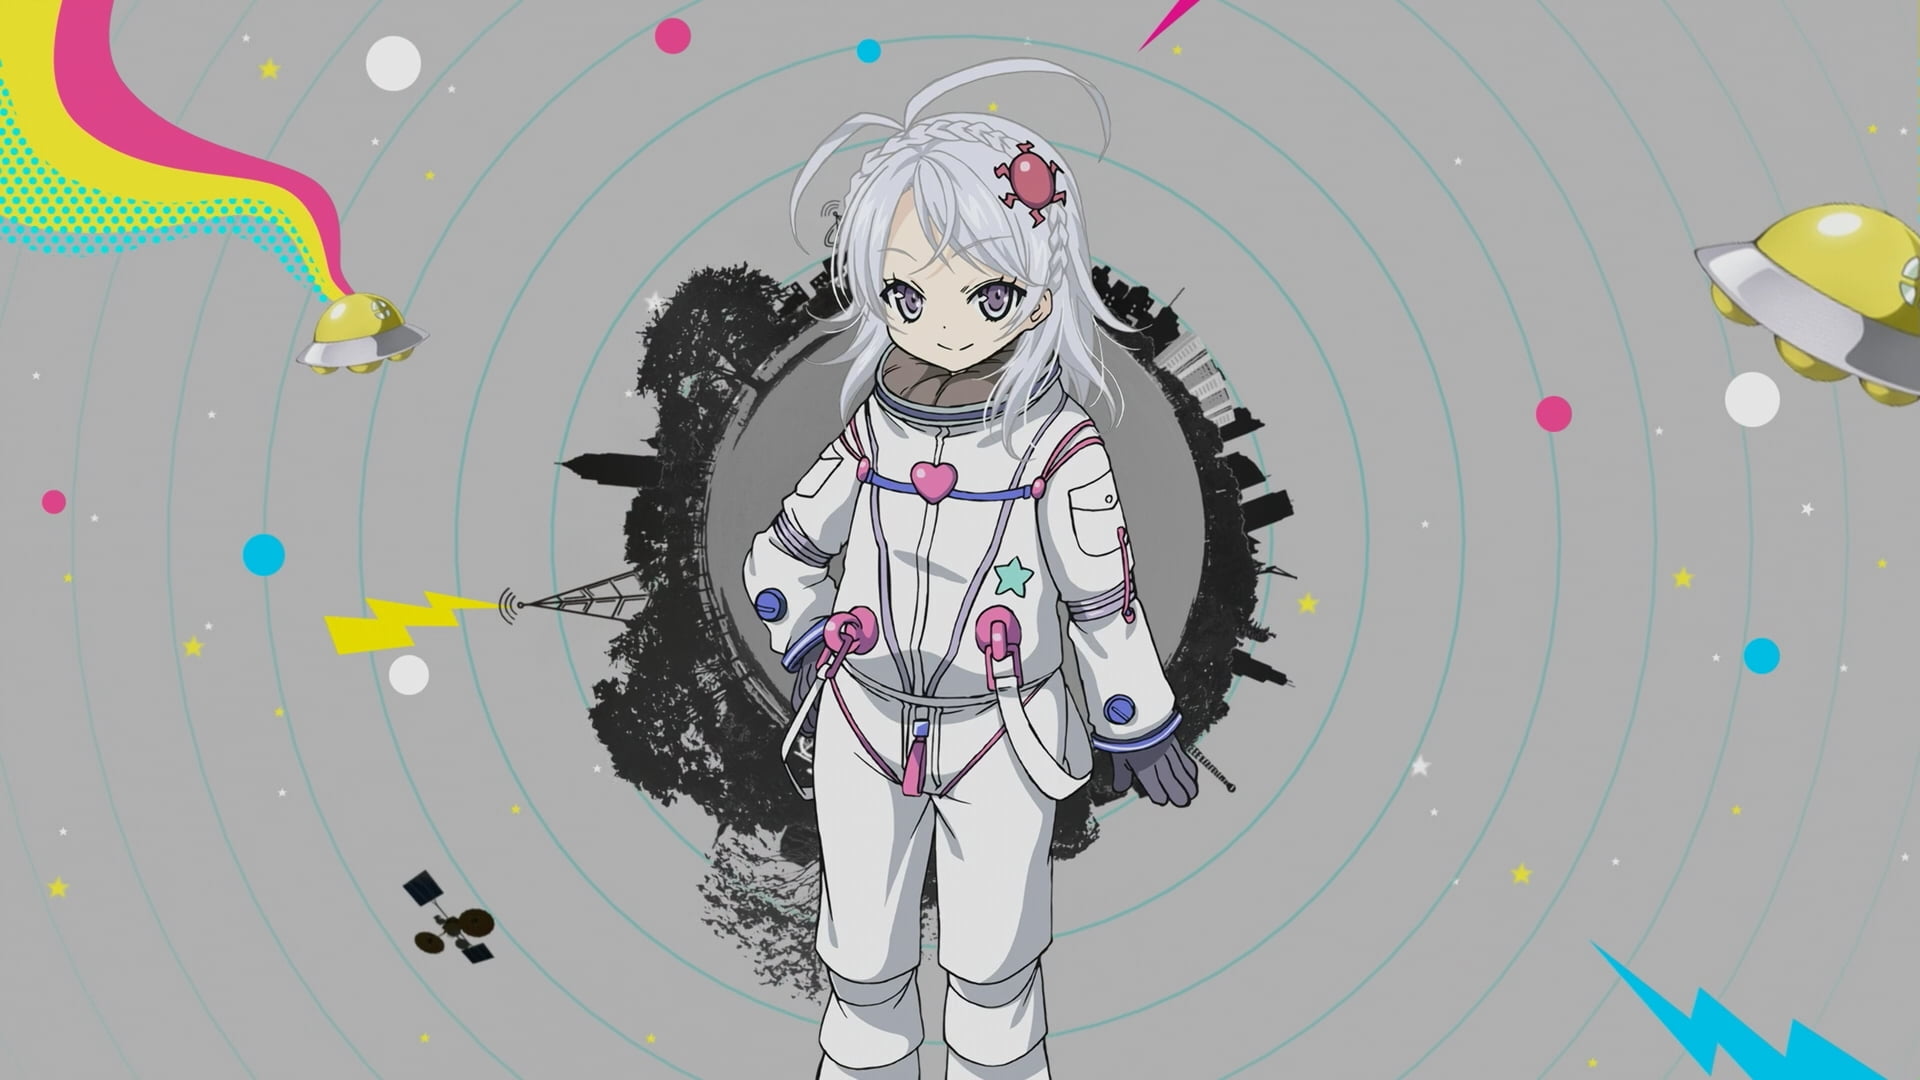 bj11-art-spaceman-anime-universe-wallpaper